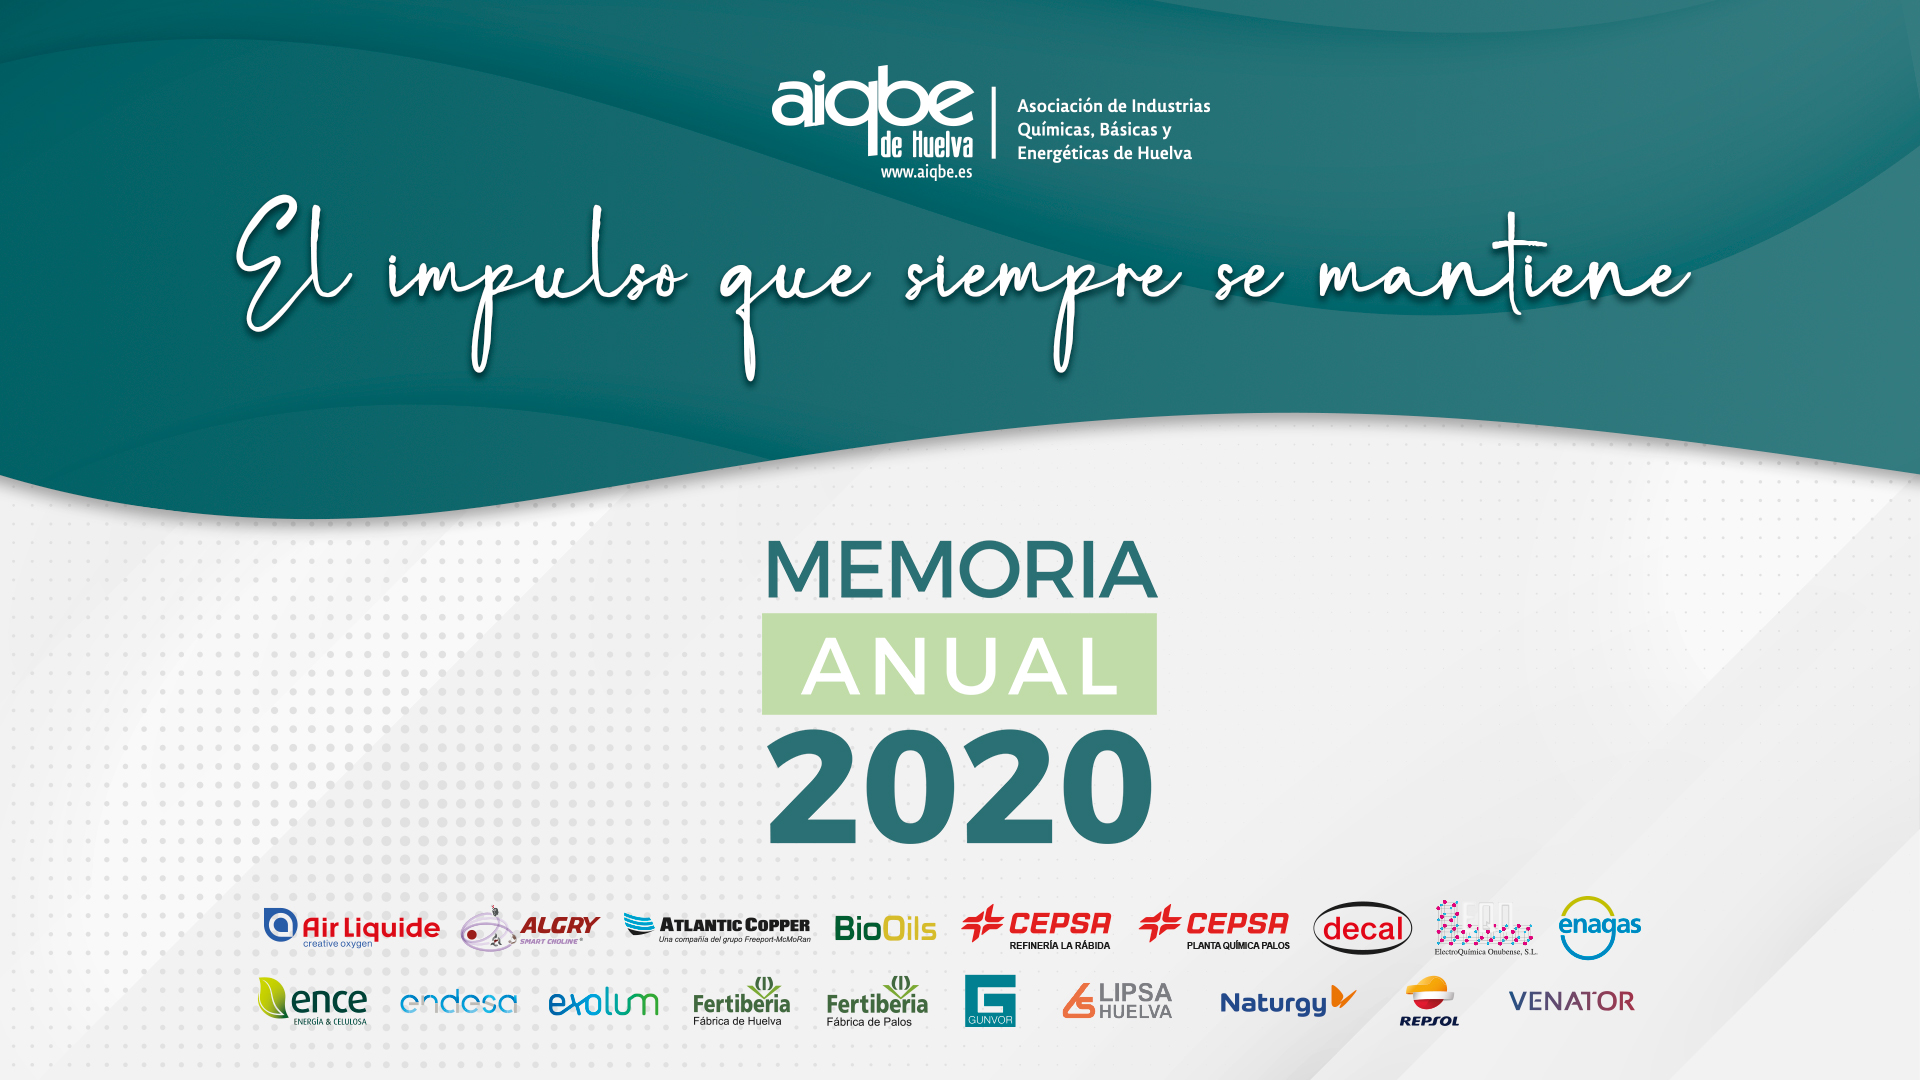 MEMORIA DE AIQBE 2020